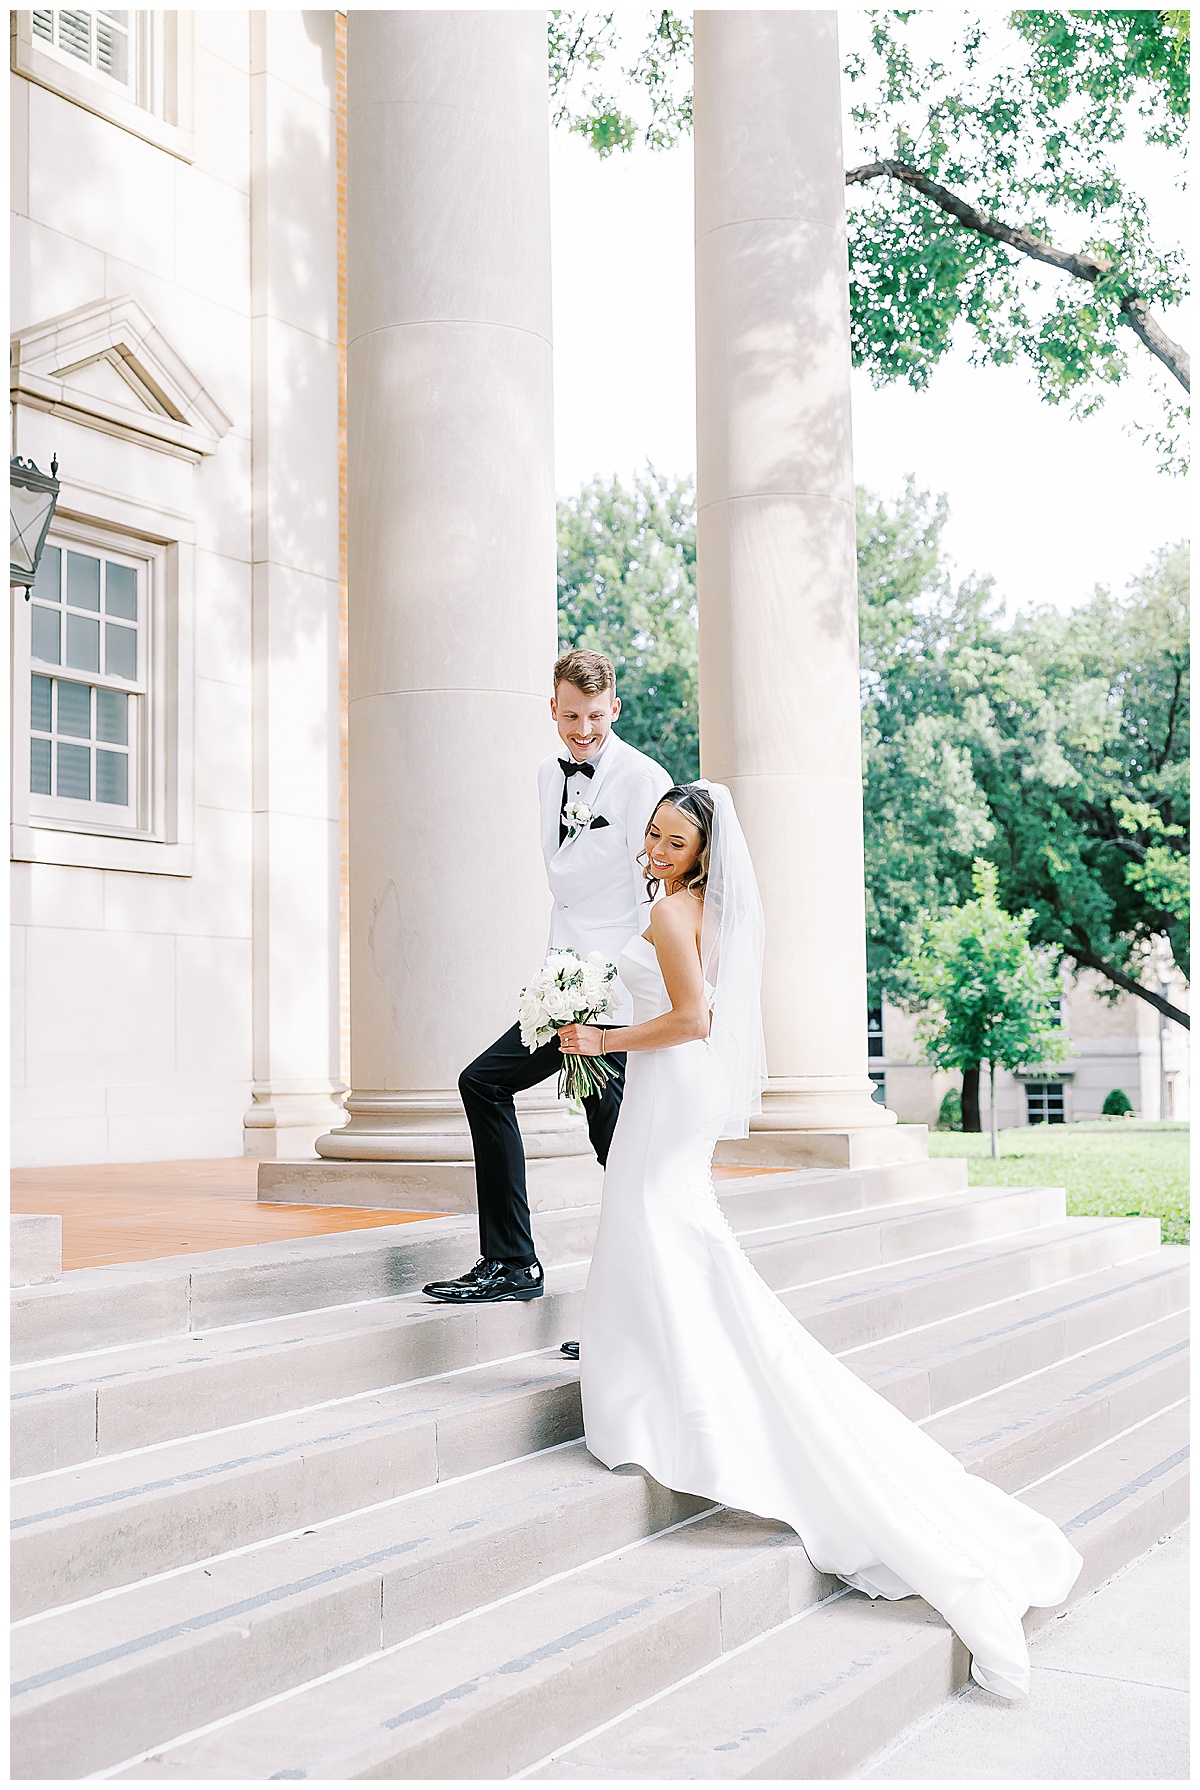 Caroline and Casen's wedding at Robert Carr Chapel in Fort Worth, TX. #dallasweddingphotographer #fortworthweddingphotographer